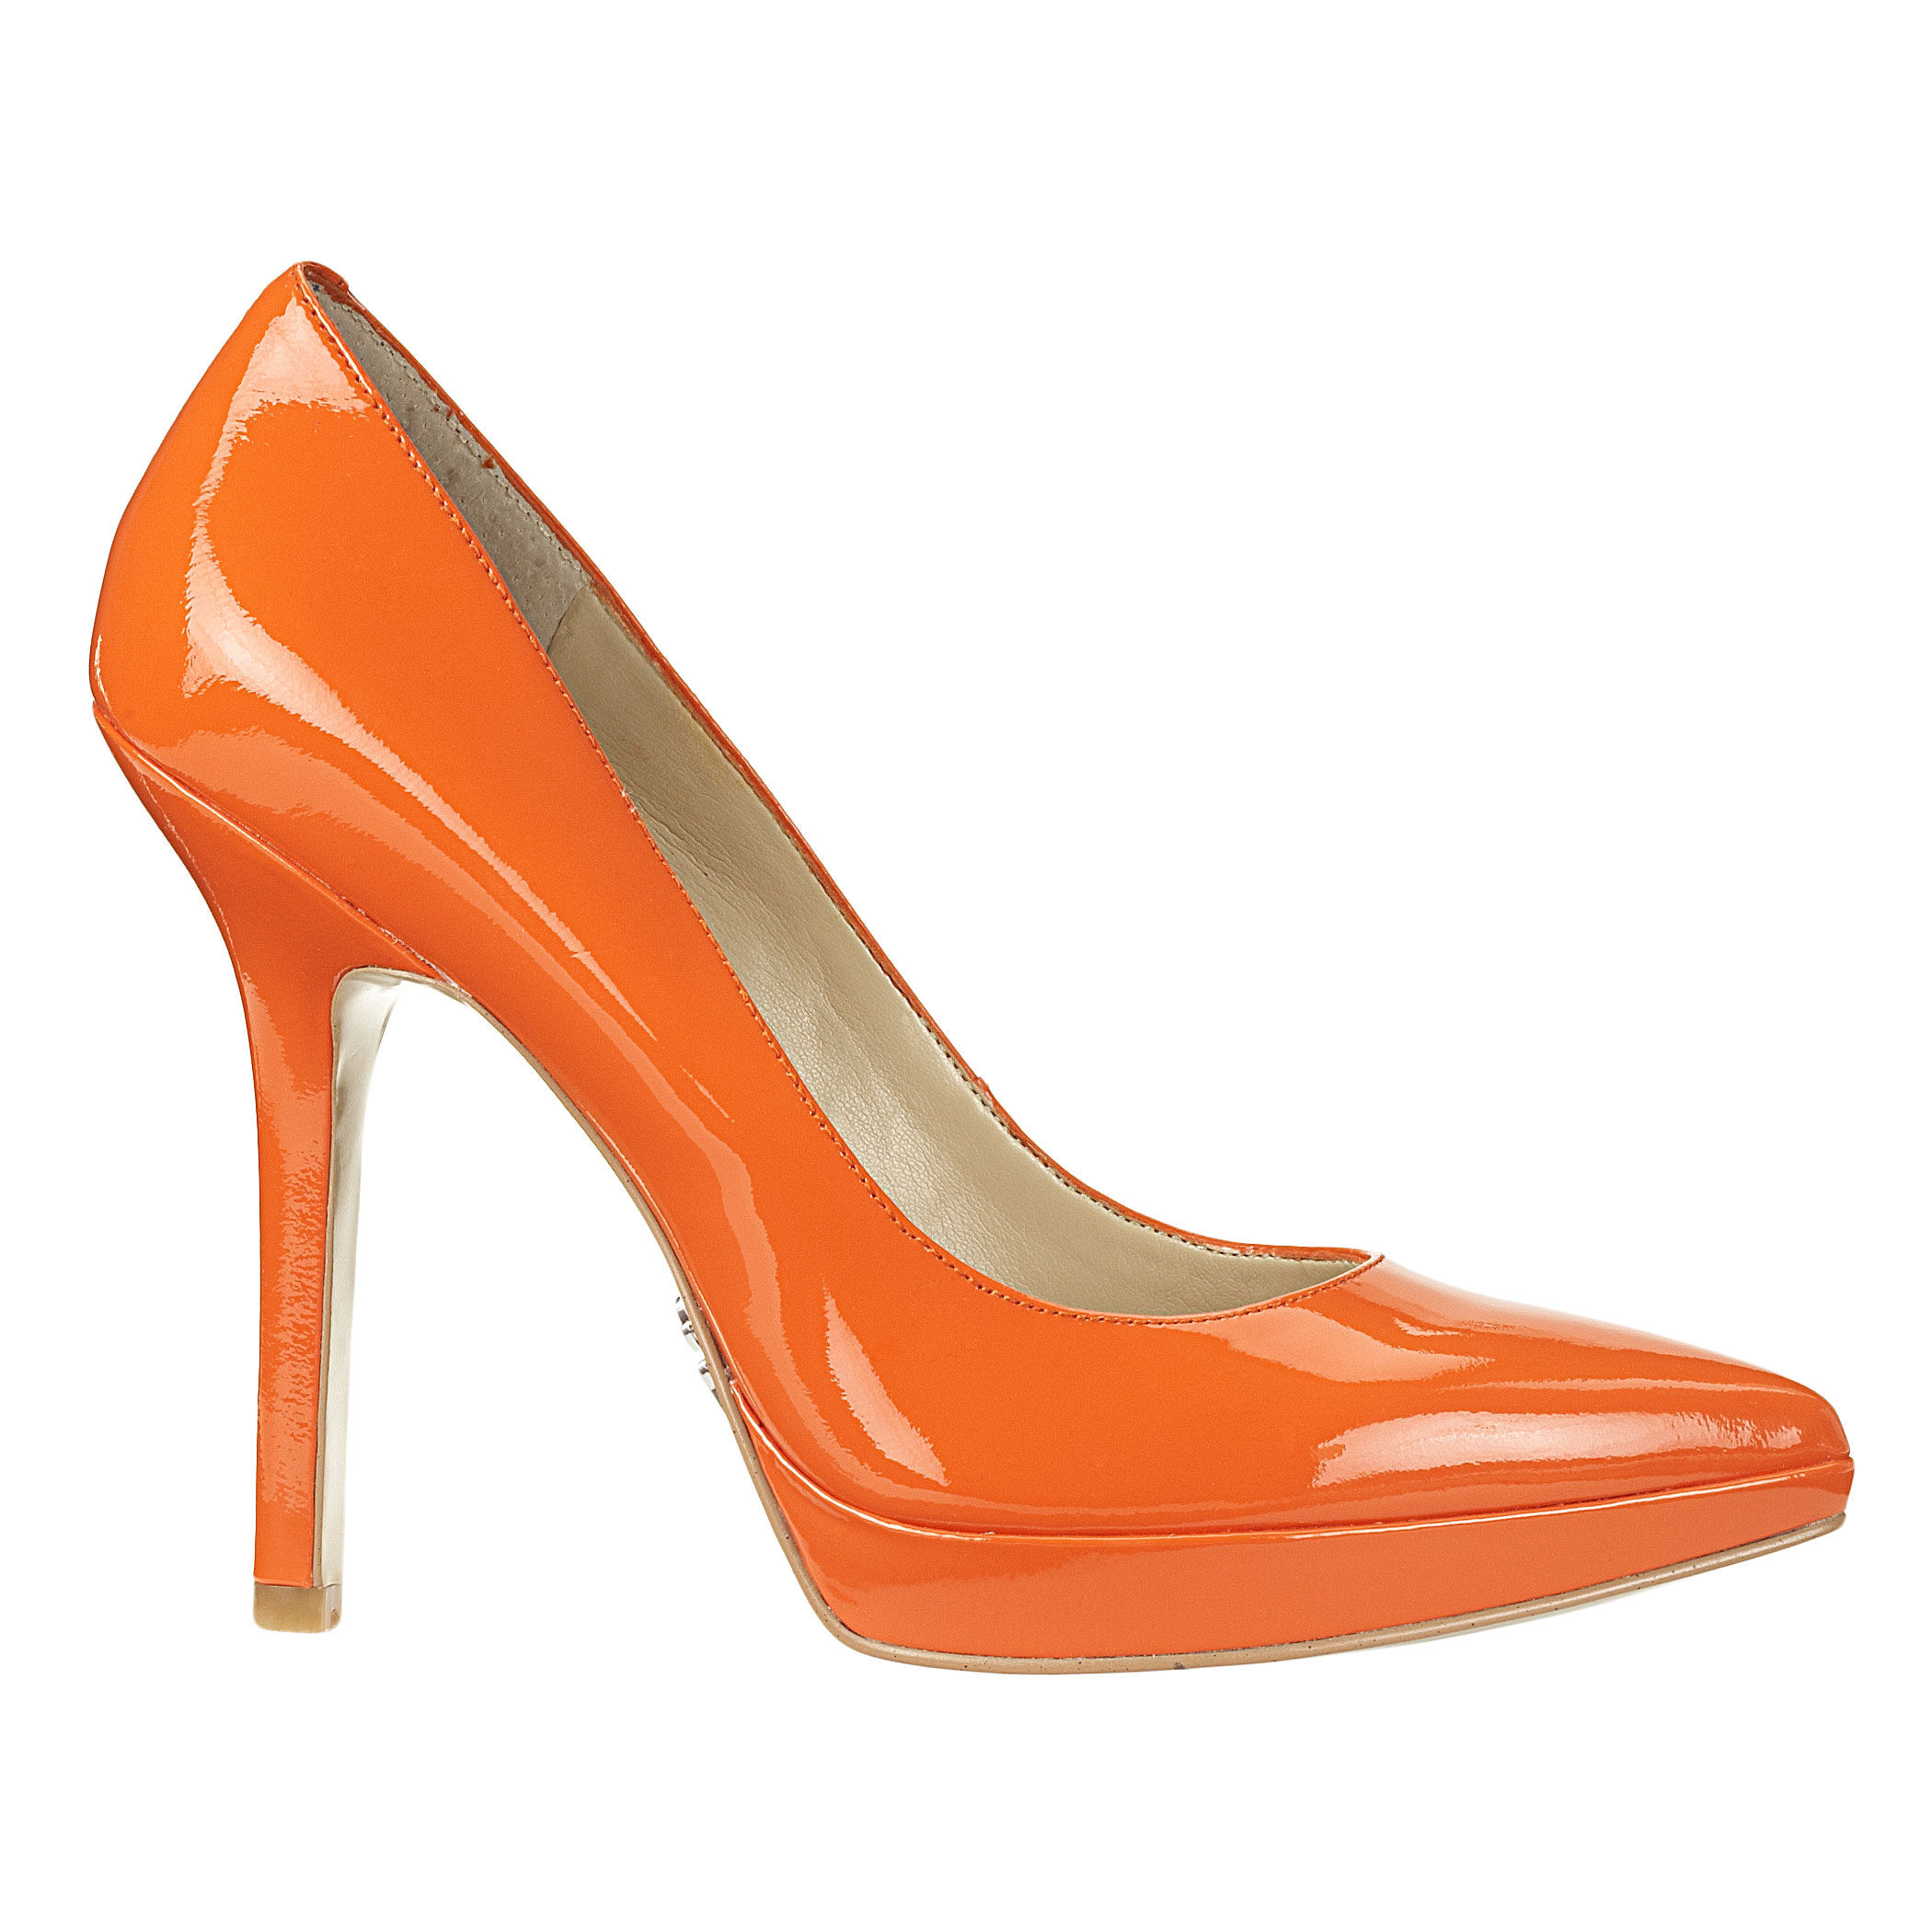 Nine West Love Fury in Orange (orange patent leather) | Lyst